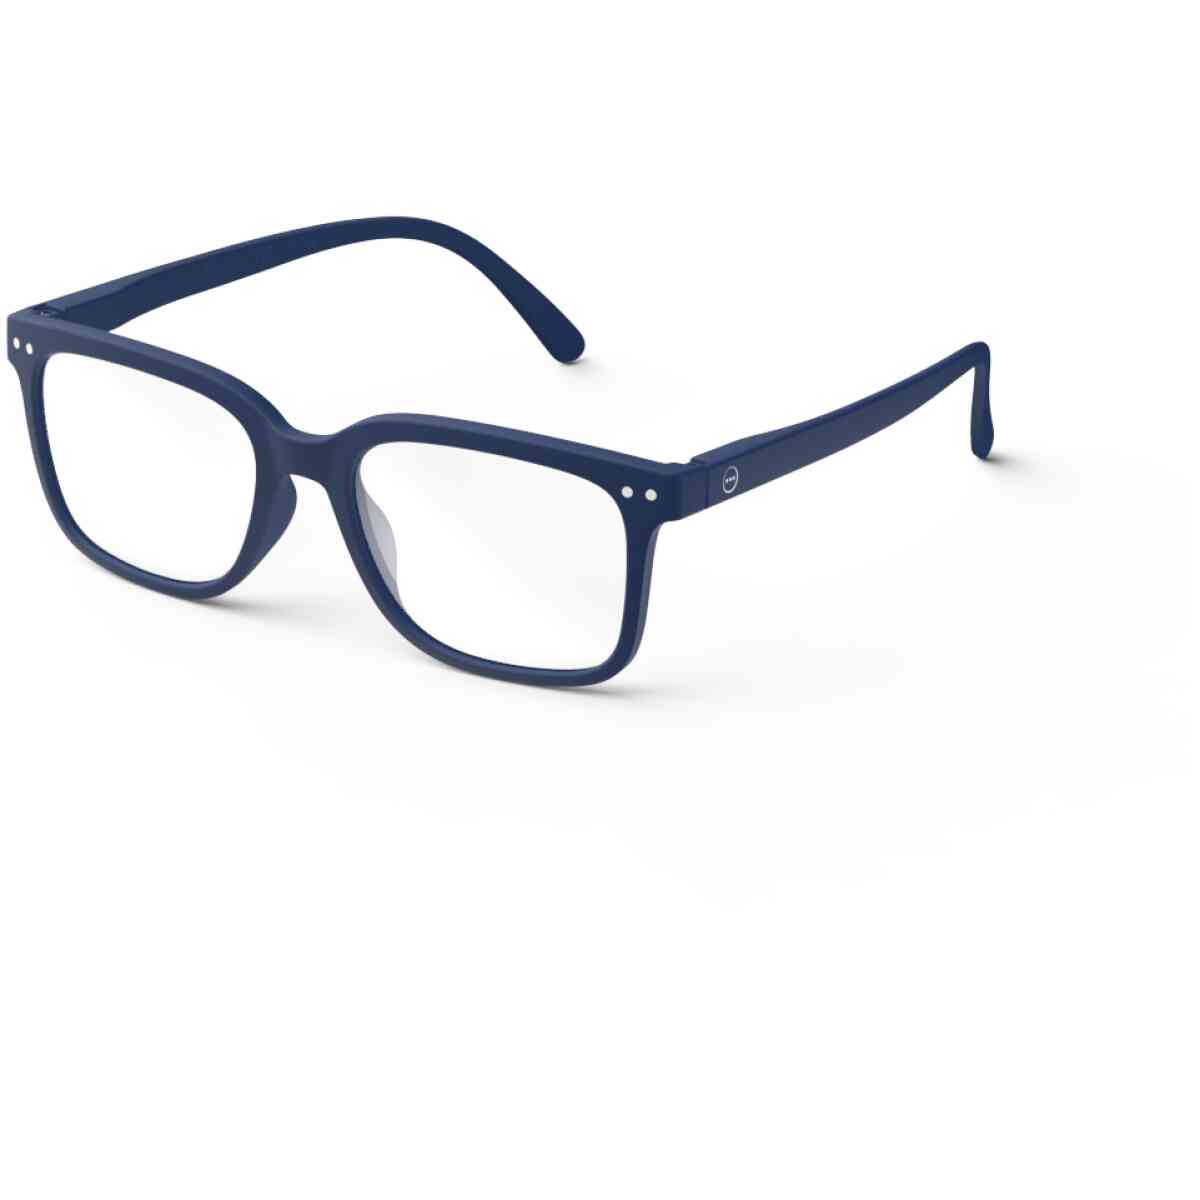 l navy blue reading glasses 2